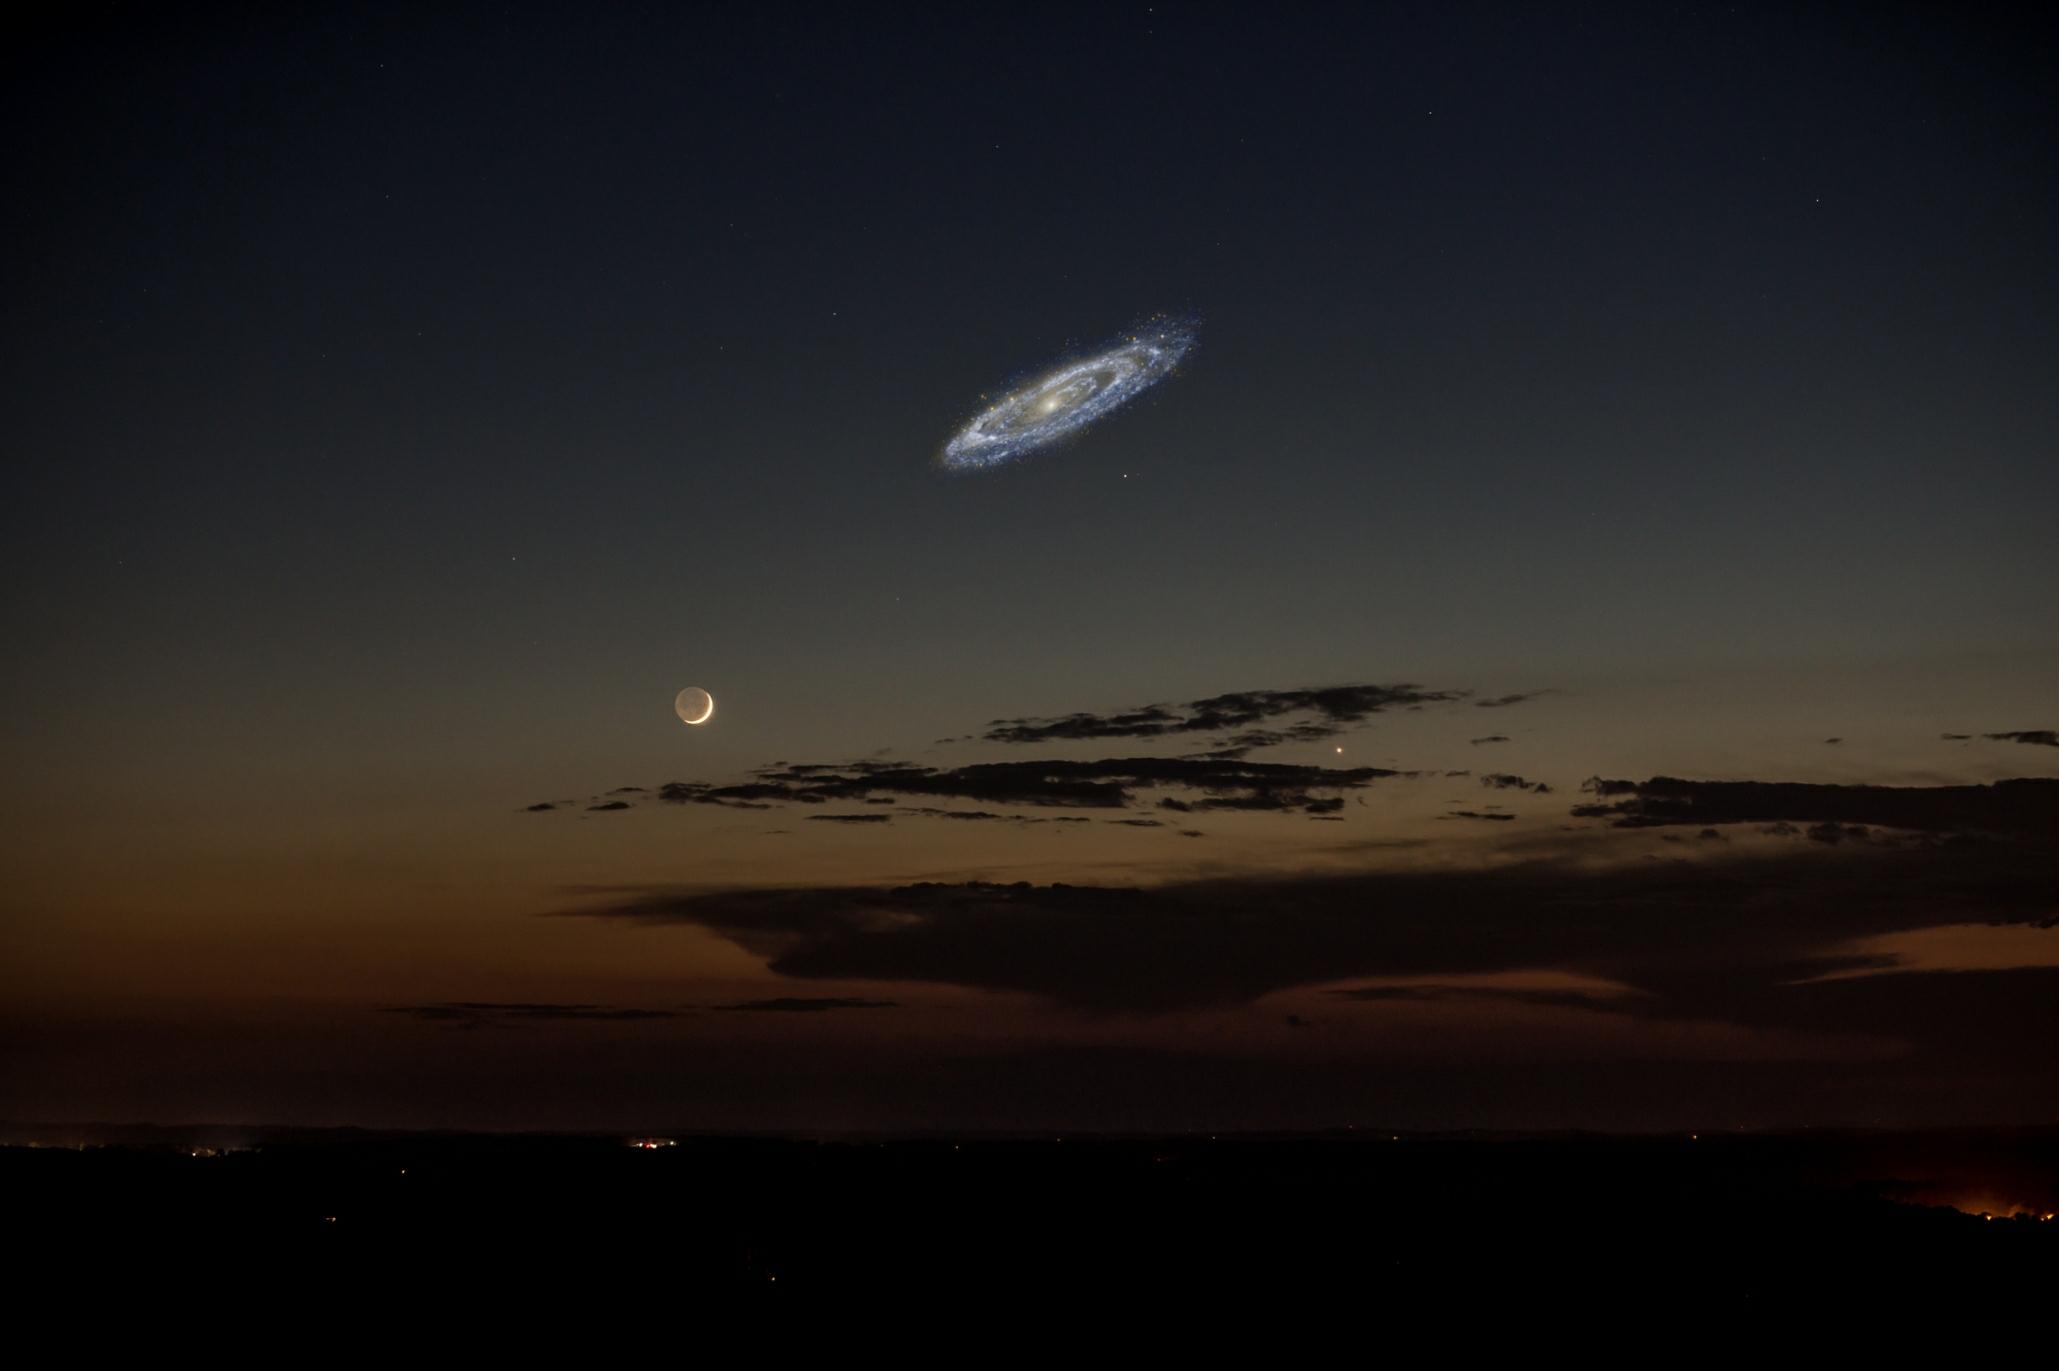 Andromeda1